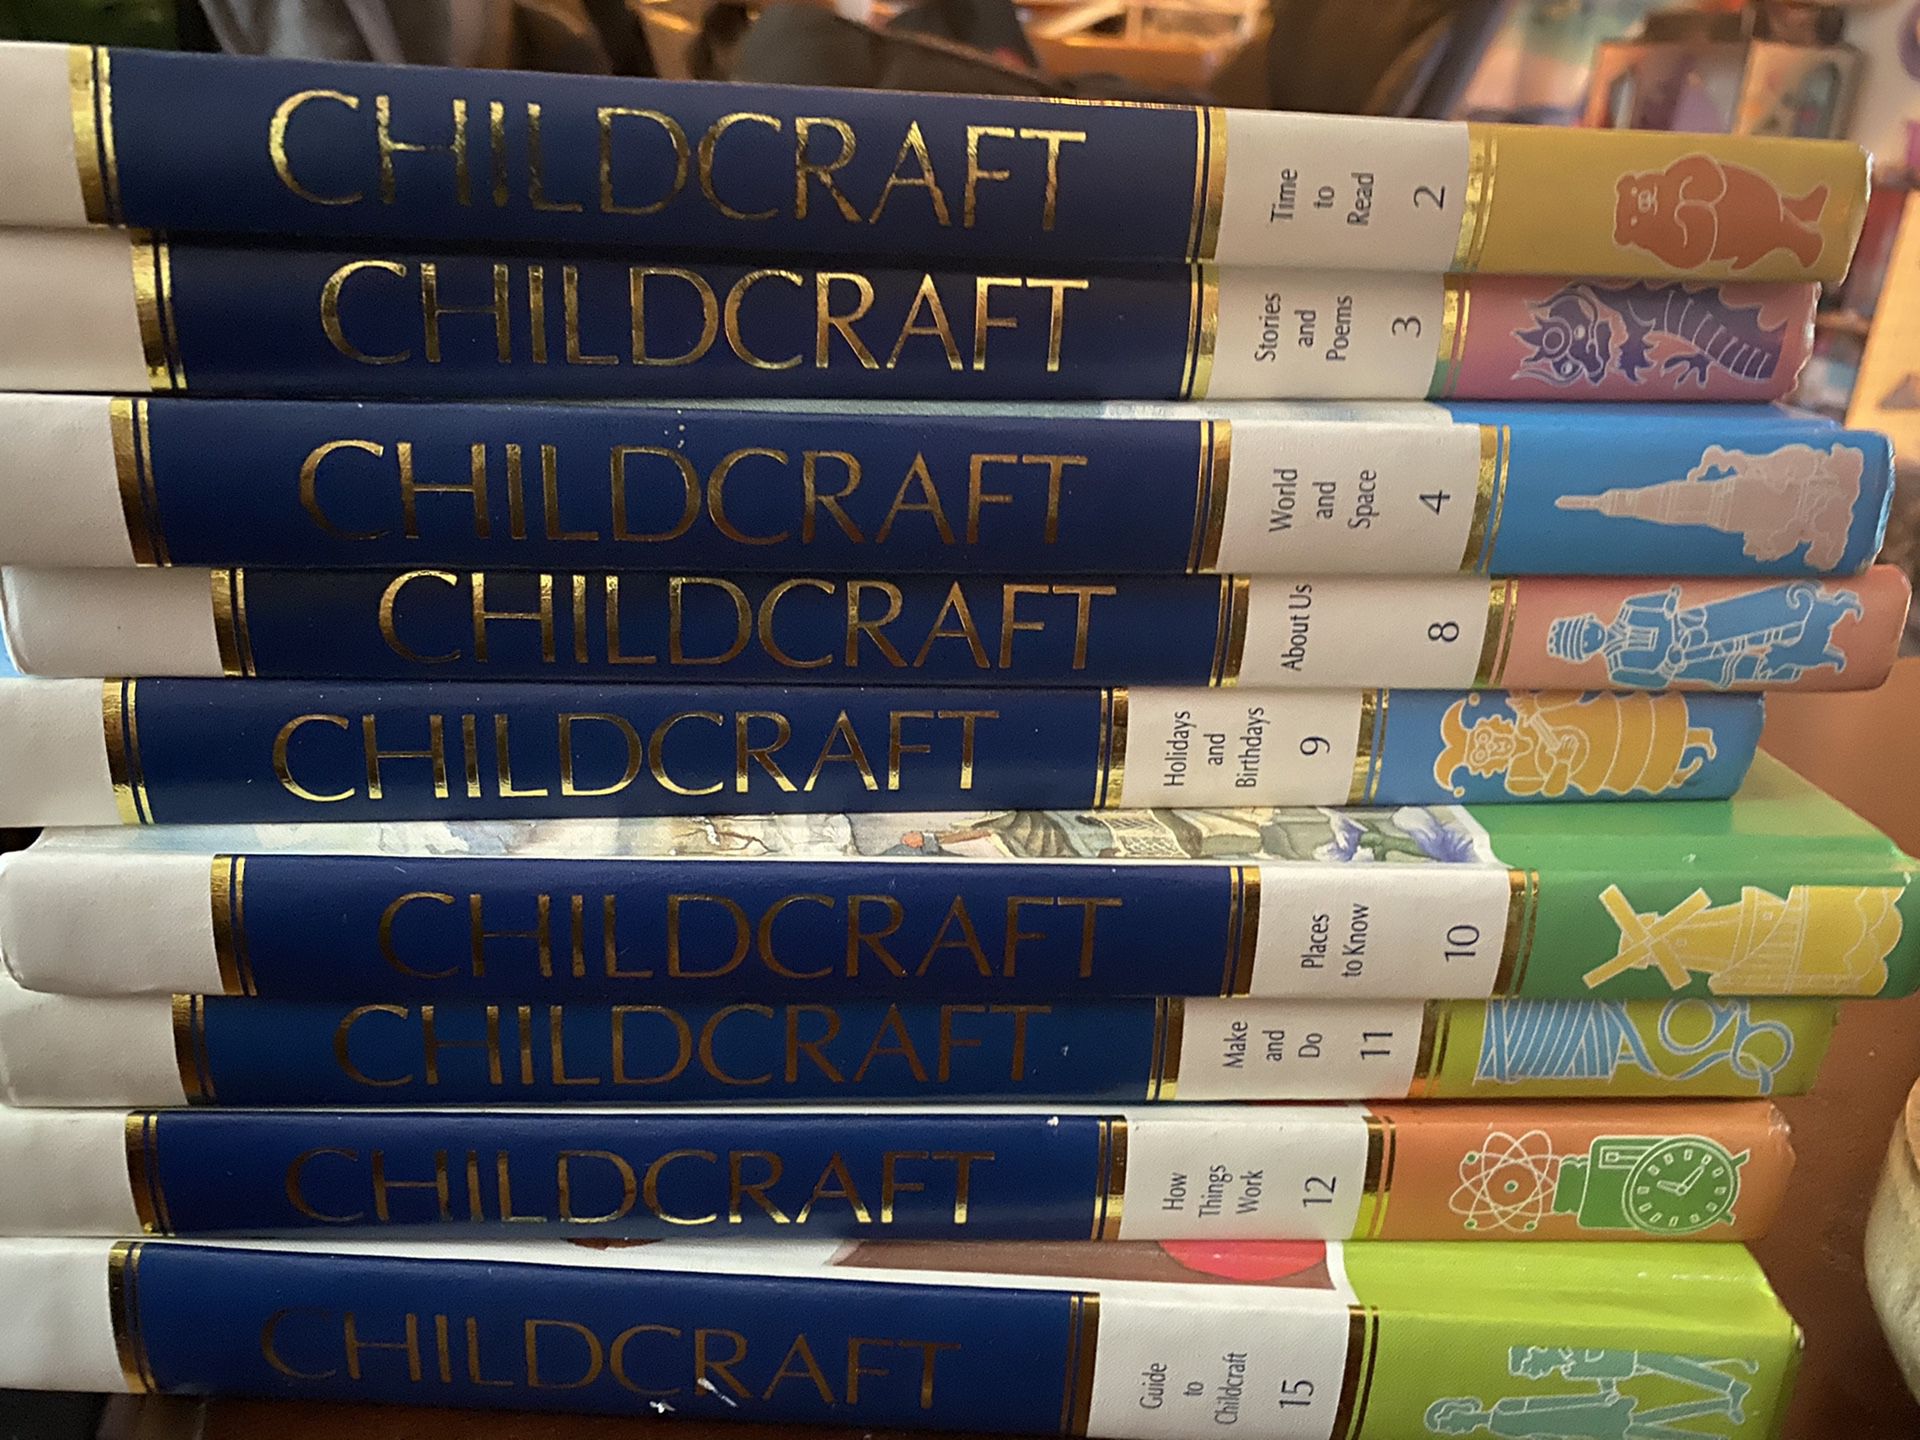 Childcraft encyclopedia, 1991 - 9 books - incomplete set